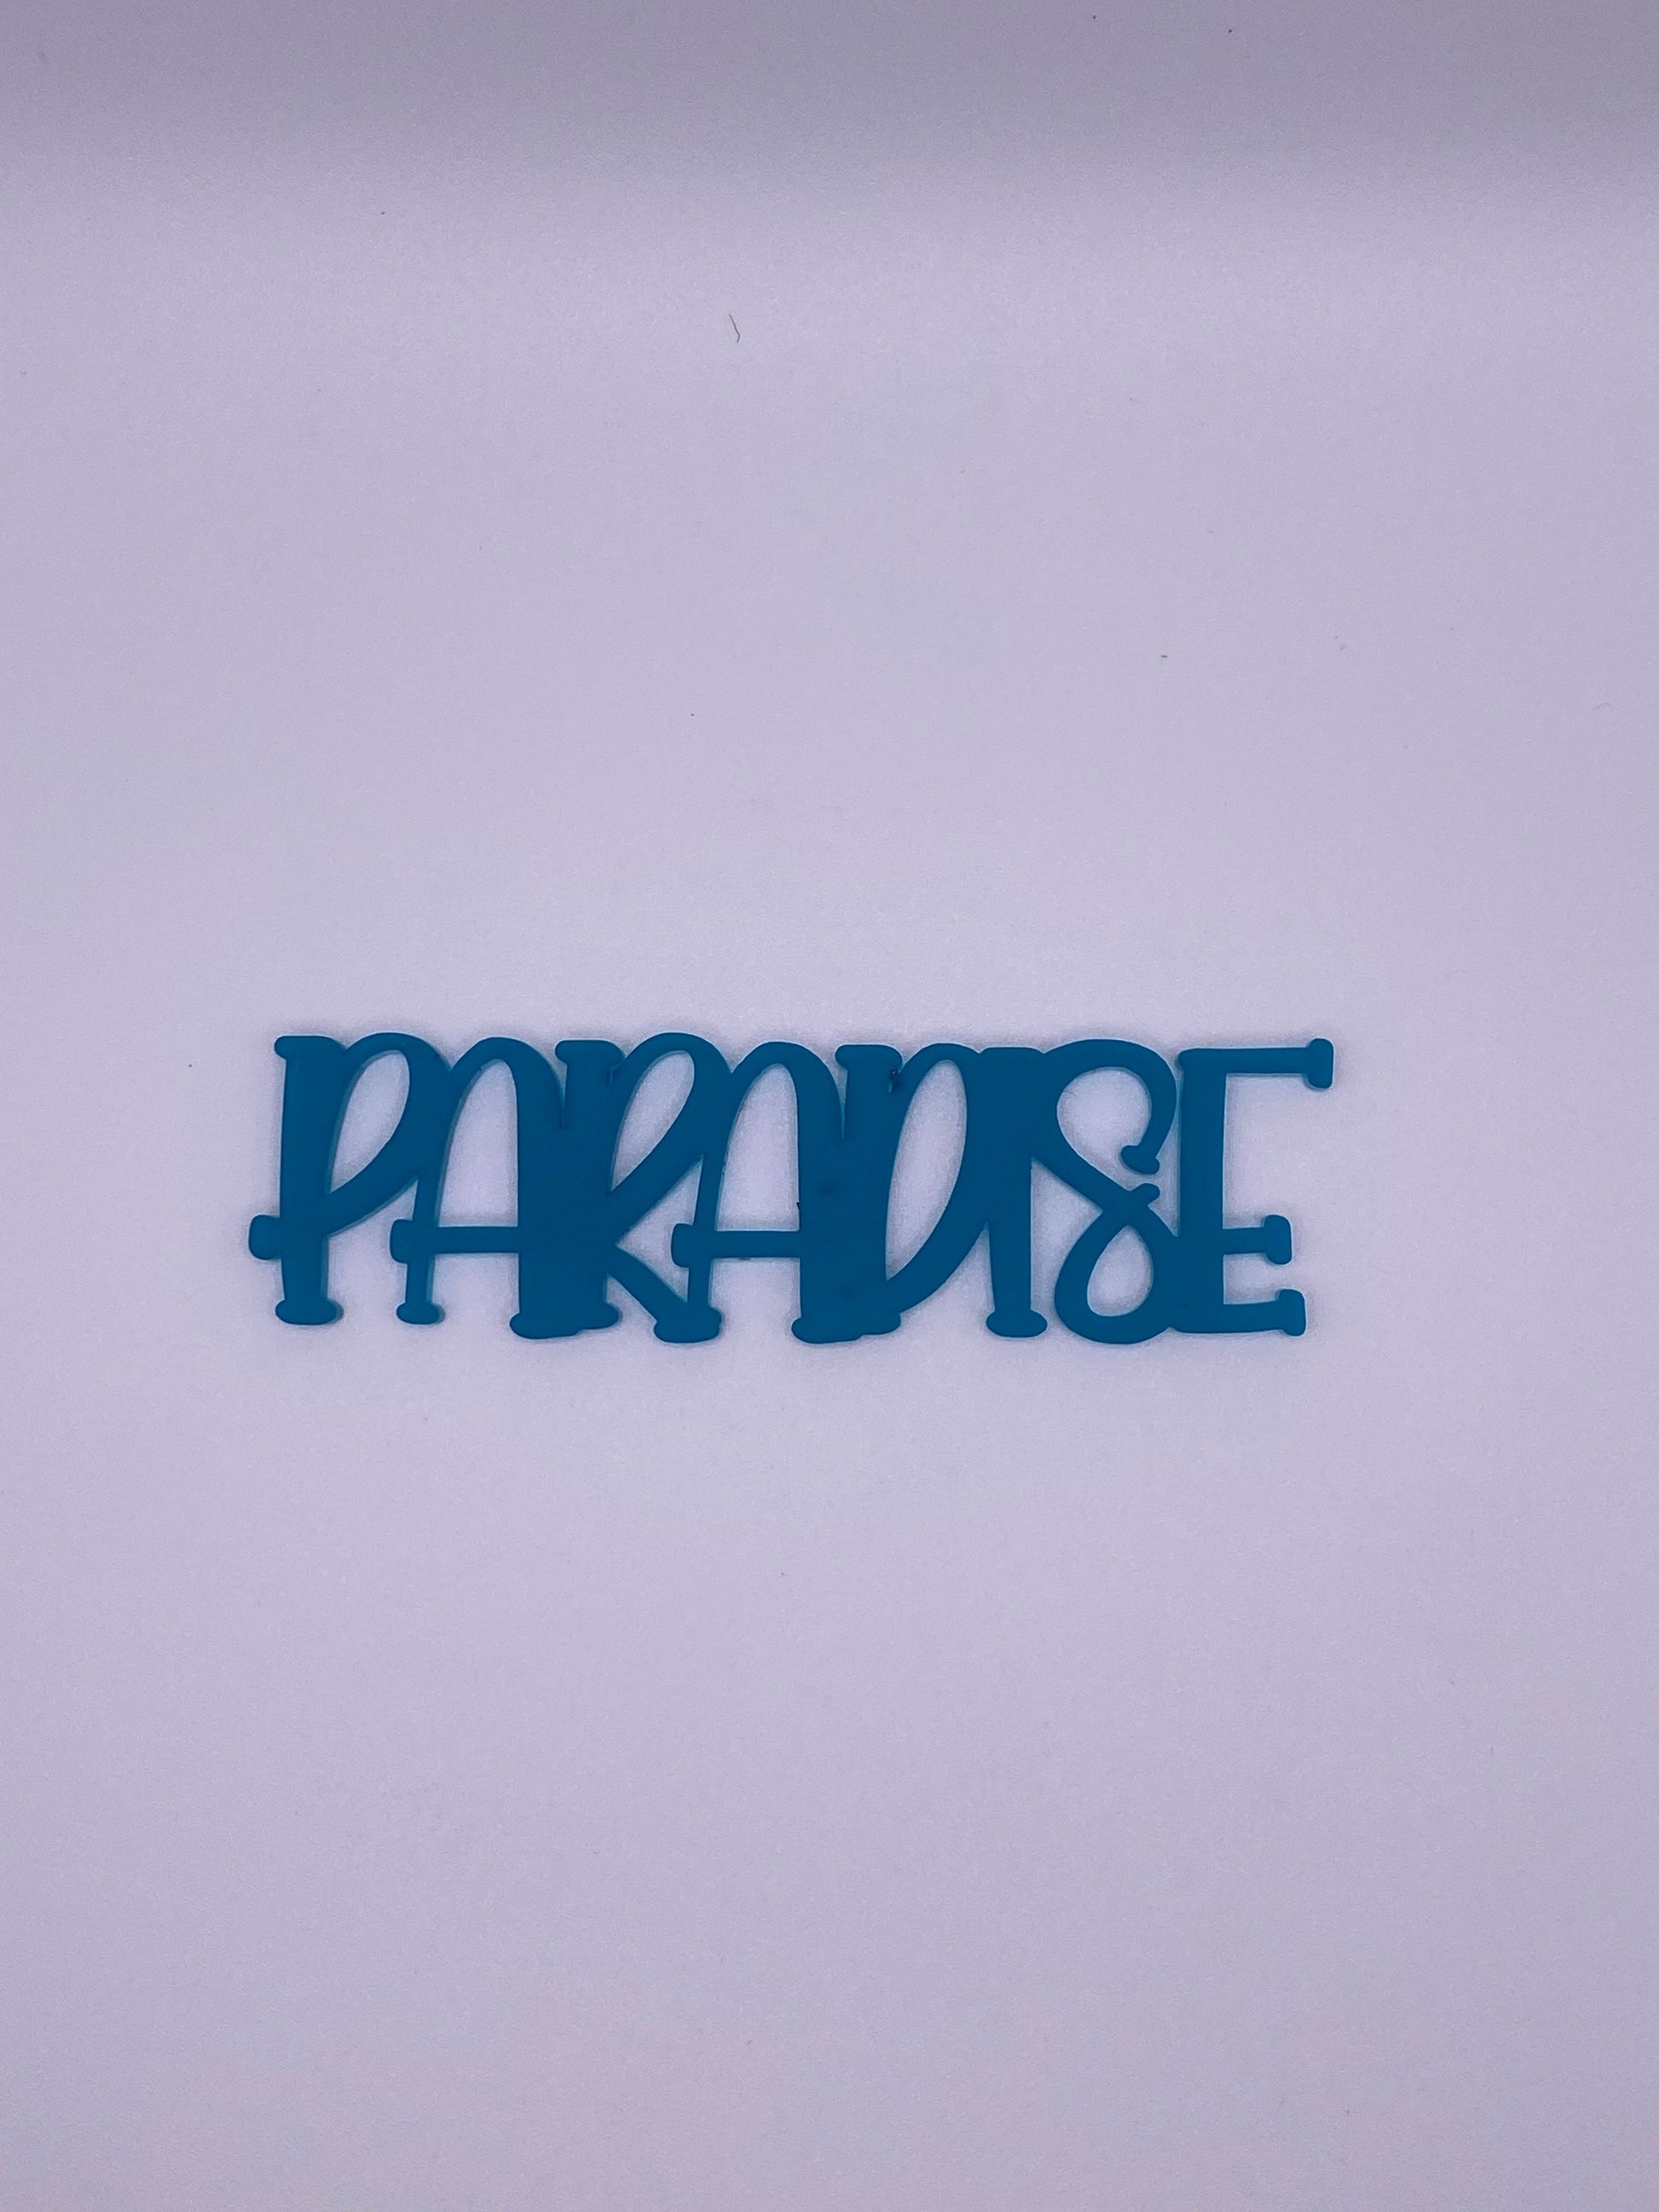 Paradise - Creative Designs By Kari